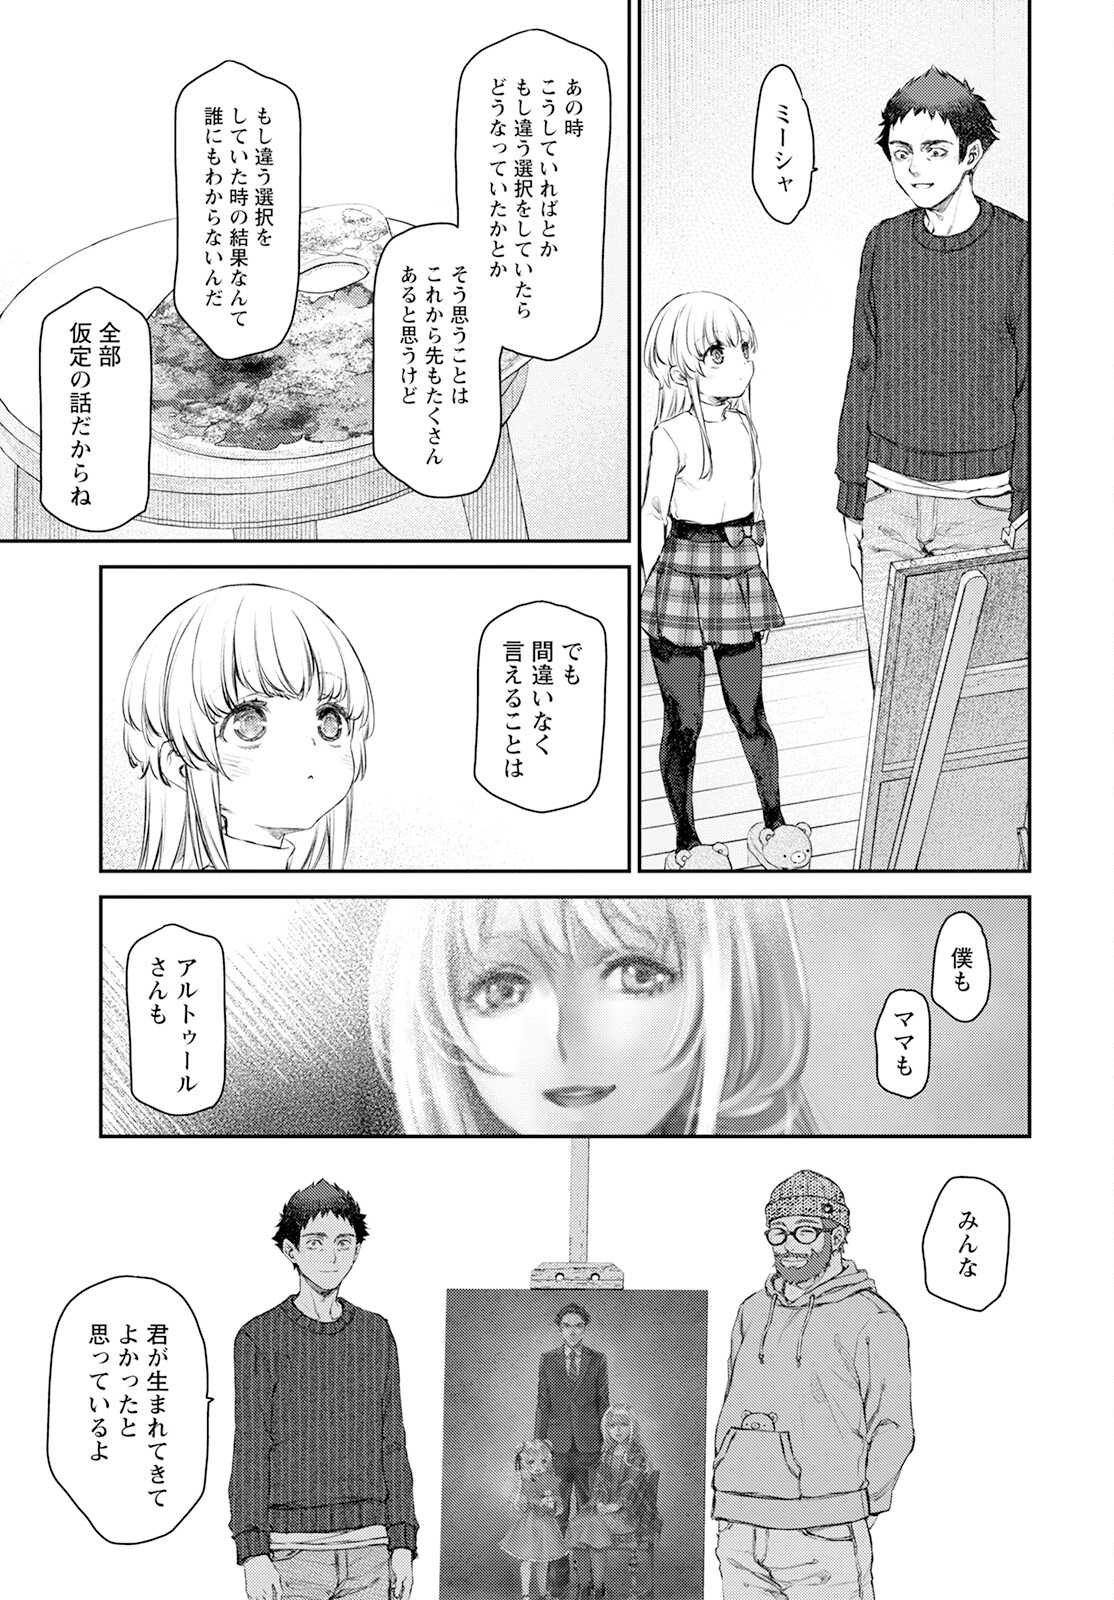 Uchi no Maid ga Uzasugiru! - Chapter 58 - Page 5